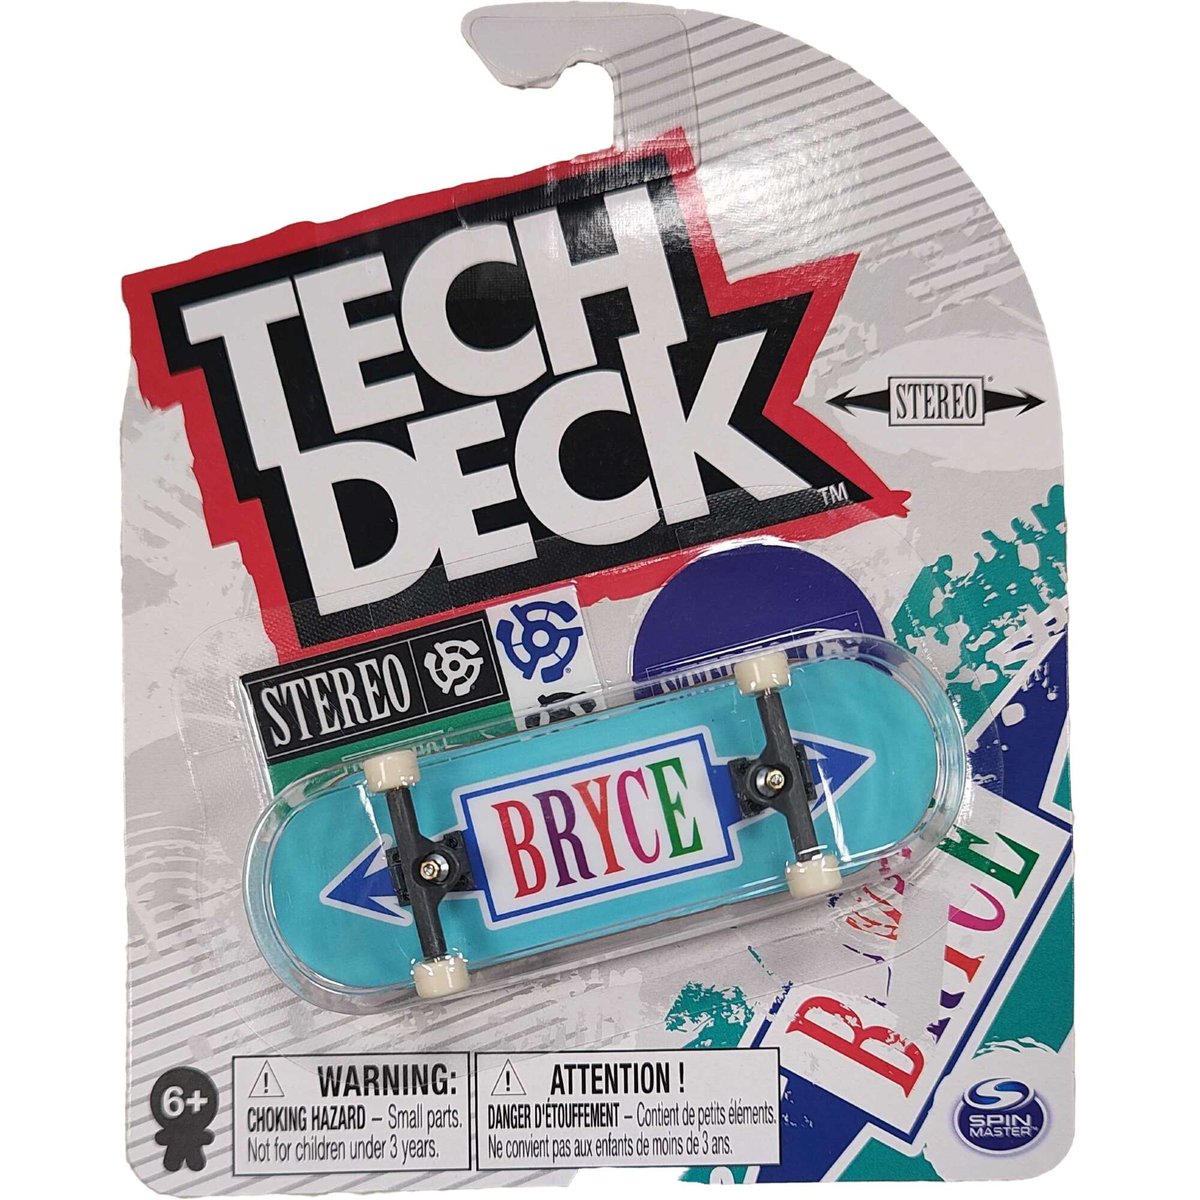 Tech Deck deskorolka fingerboard Stereo Bryce + naklejki